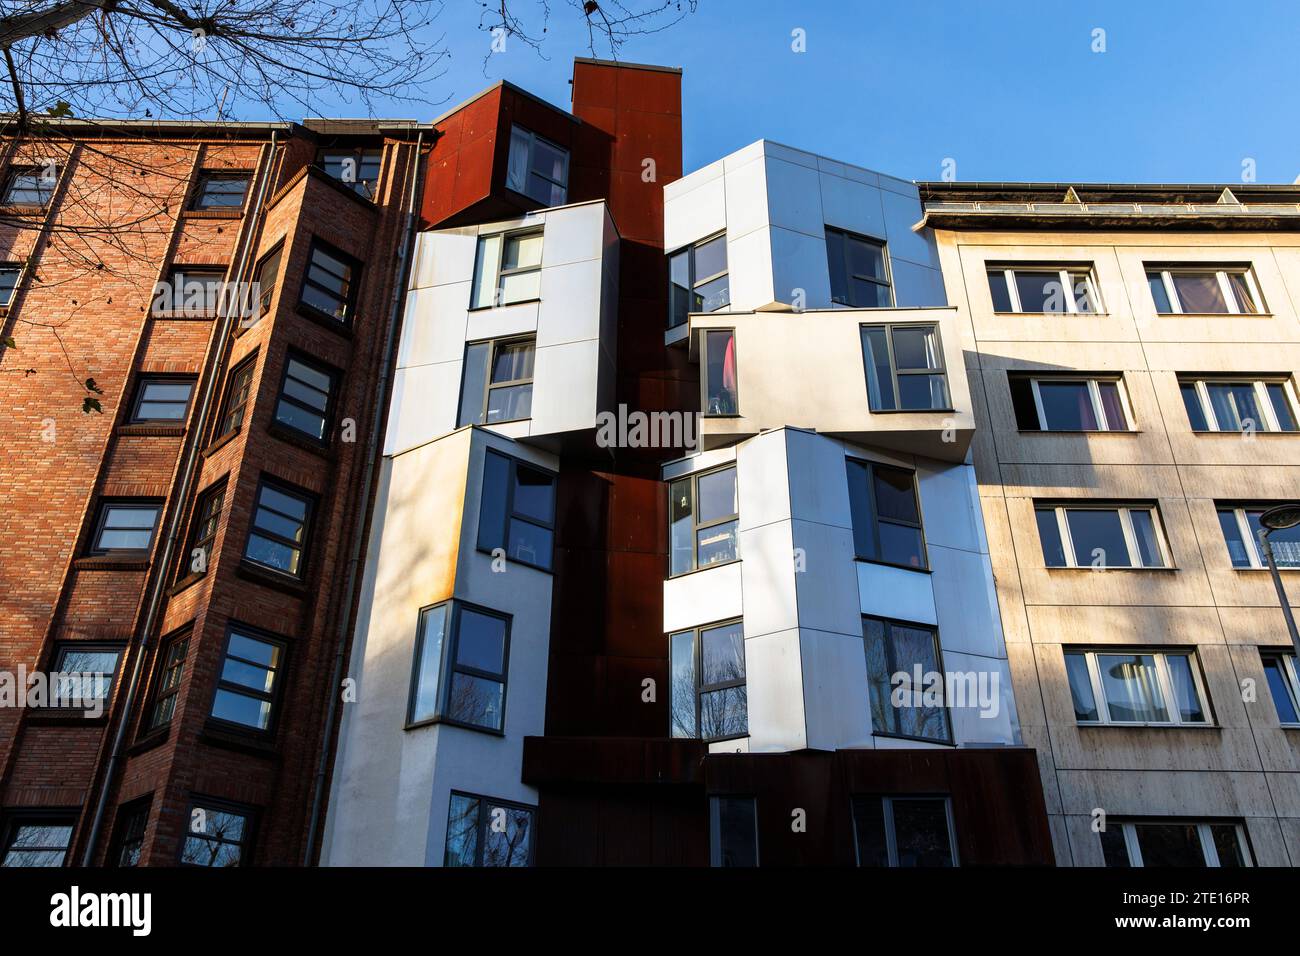 Maison avec façade cubiste dans la rue Hansaring, Cologne, Allemagne Haus mit kubistischer Fassade am Hansaring, Koeln, Deutschland. Banque D'Images